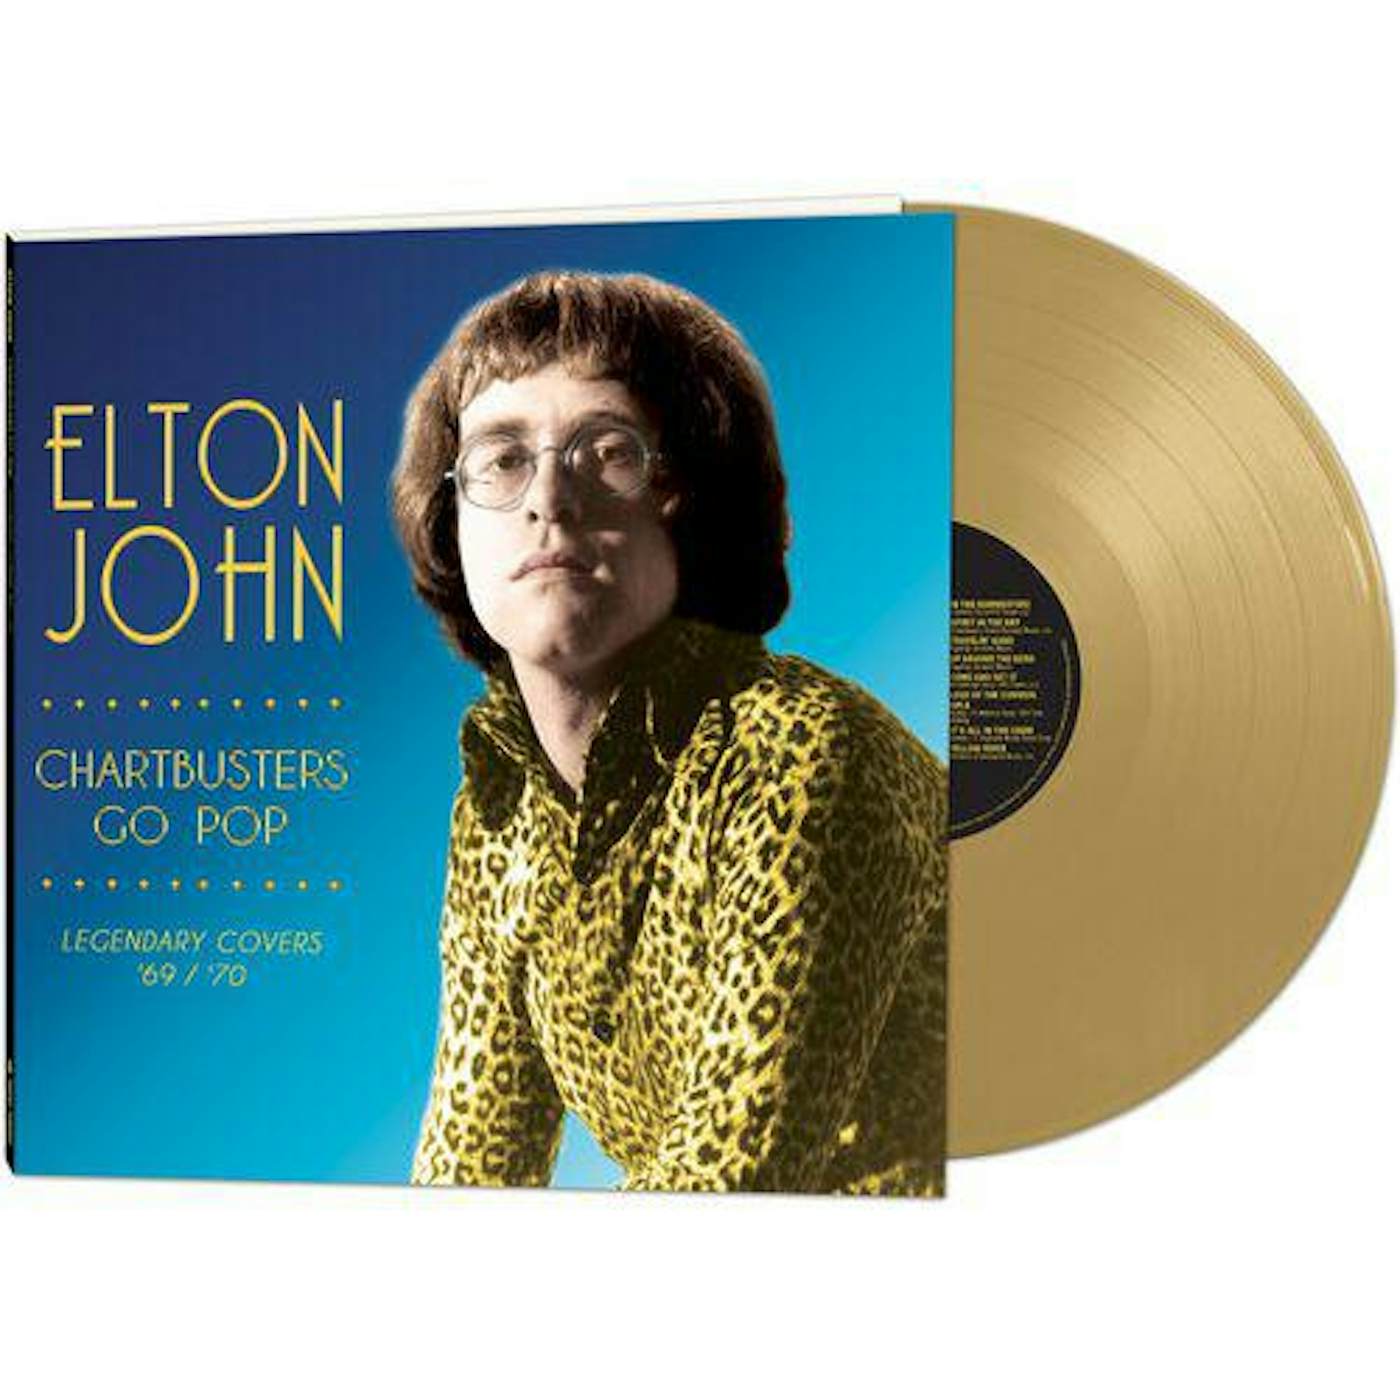 Elton John Chartbusters Go Pop - Legendary Covers '69 / '70 Vinyl Record